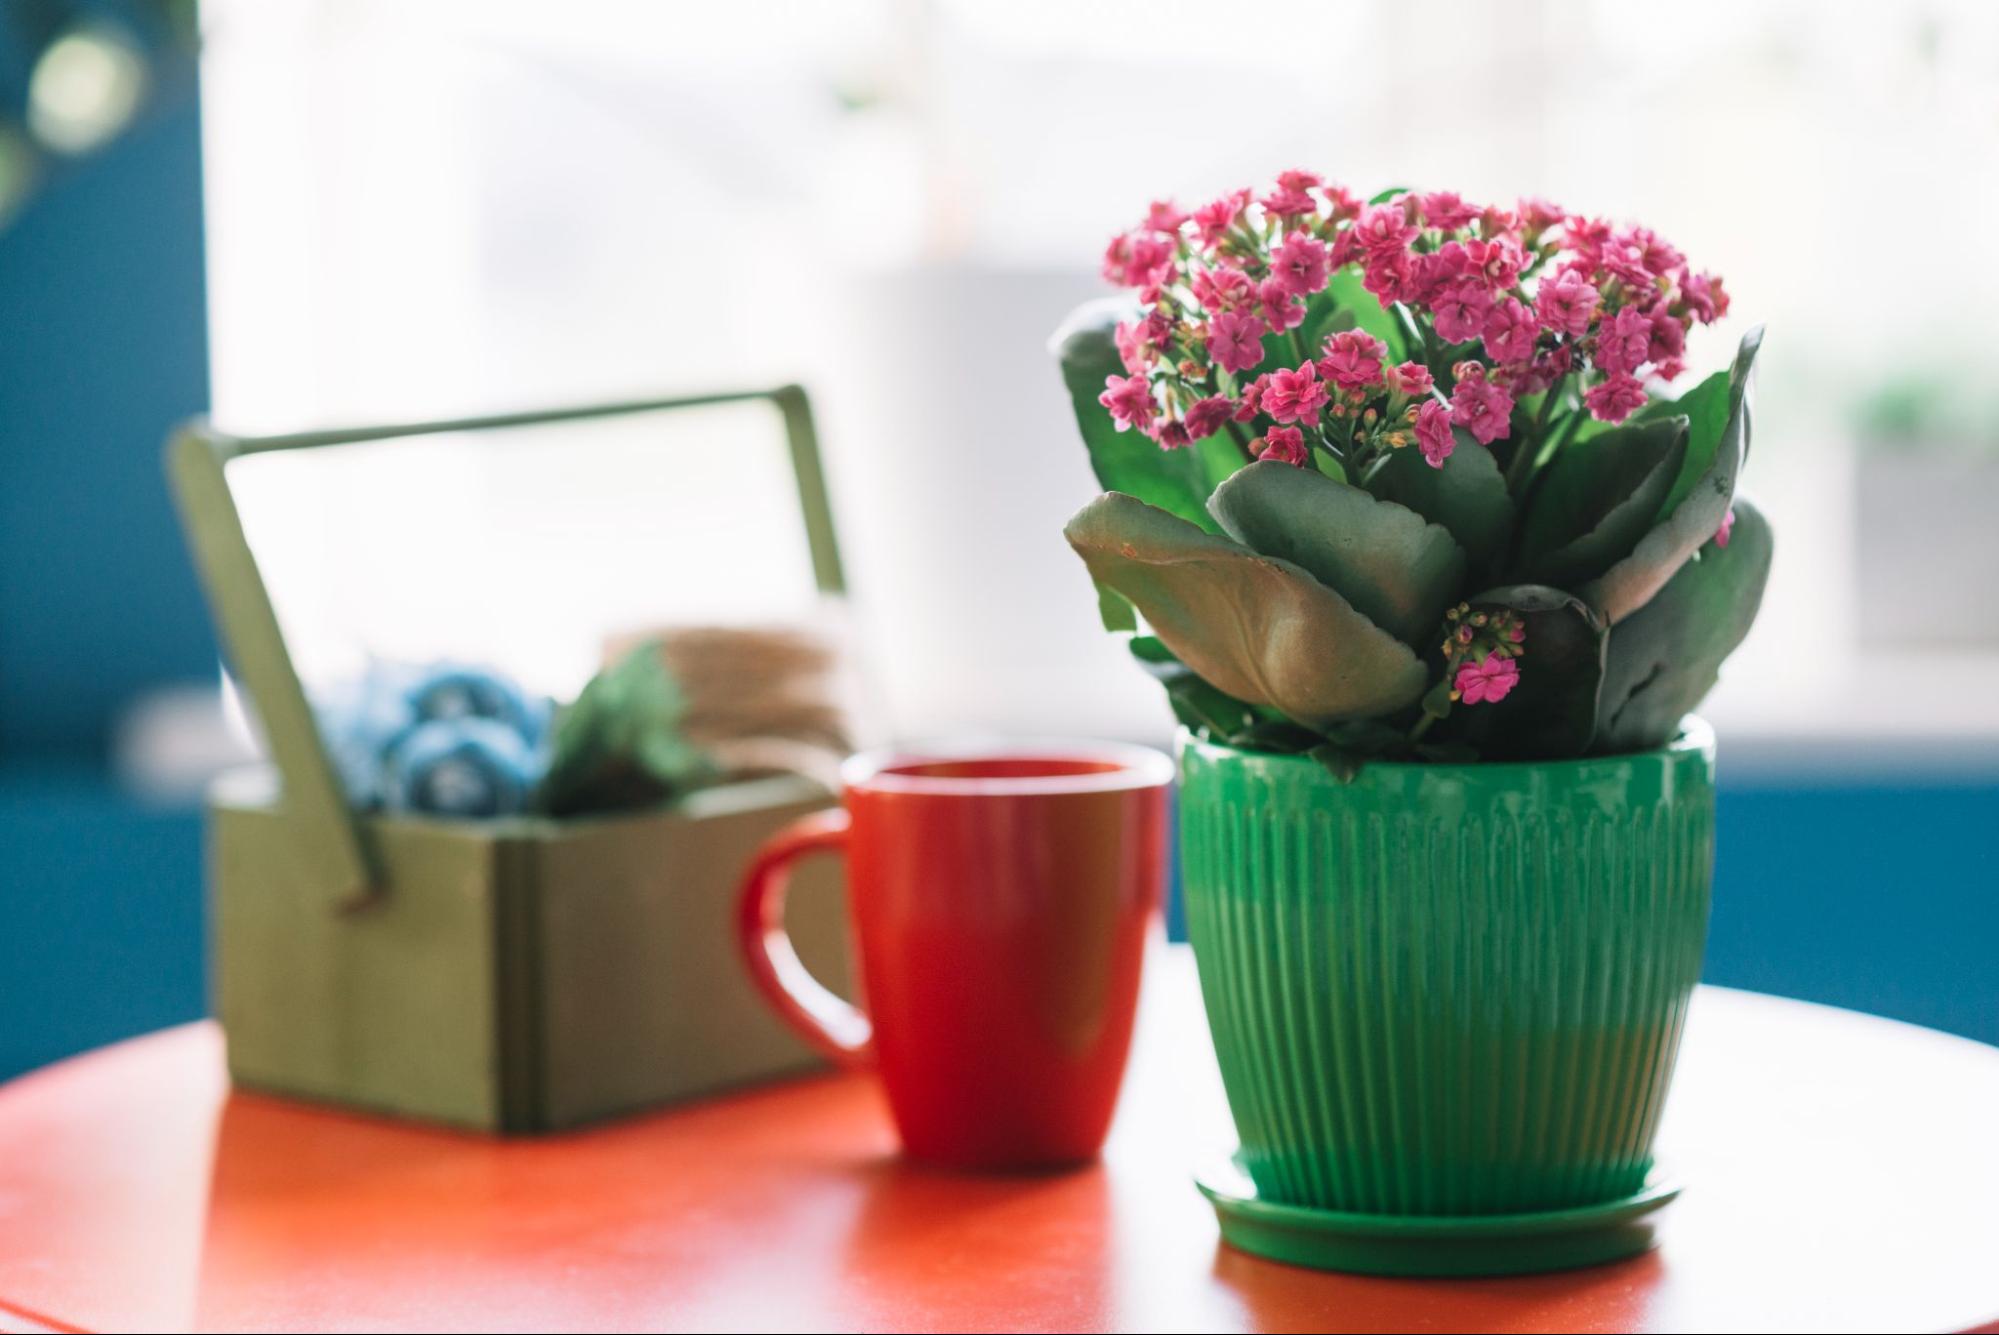 Personalized flower pot, ideal wedding gift idea